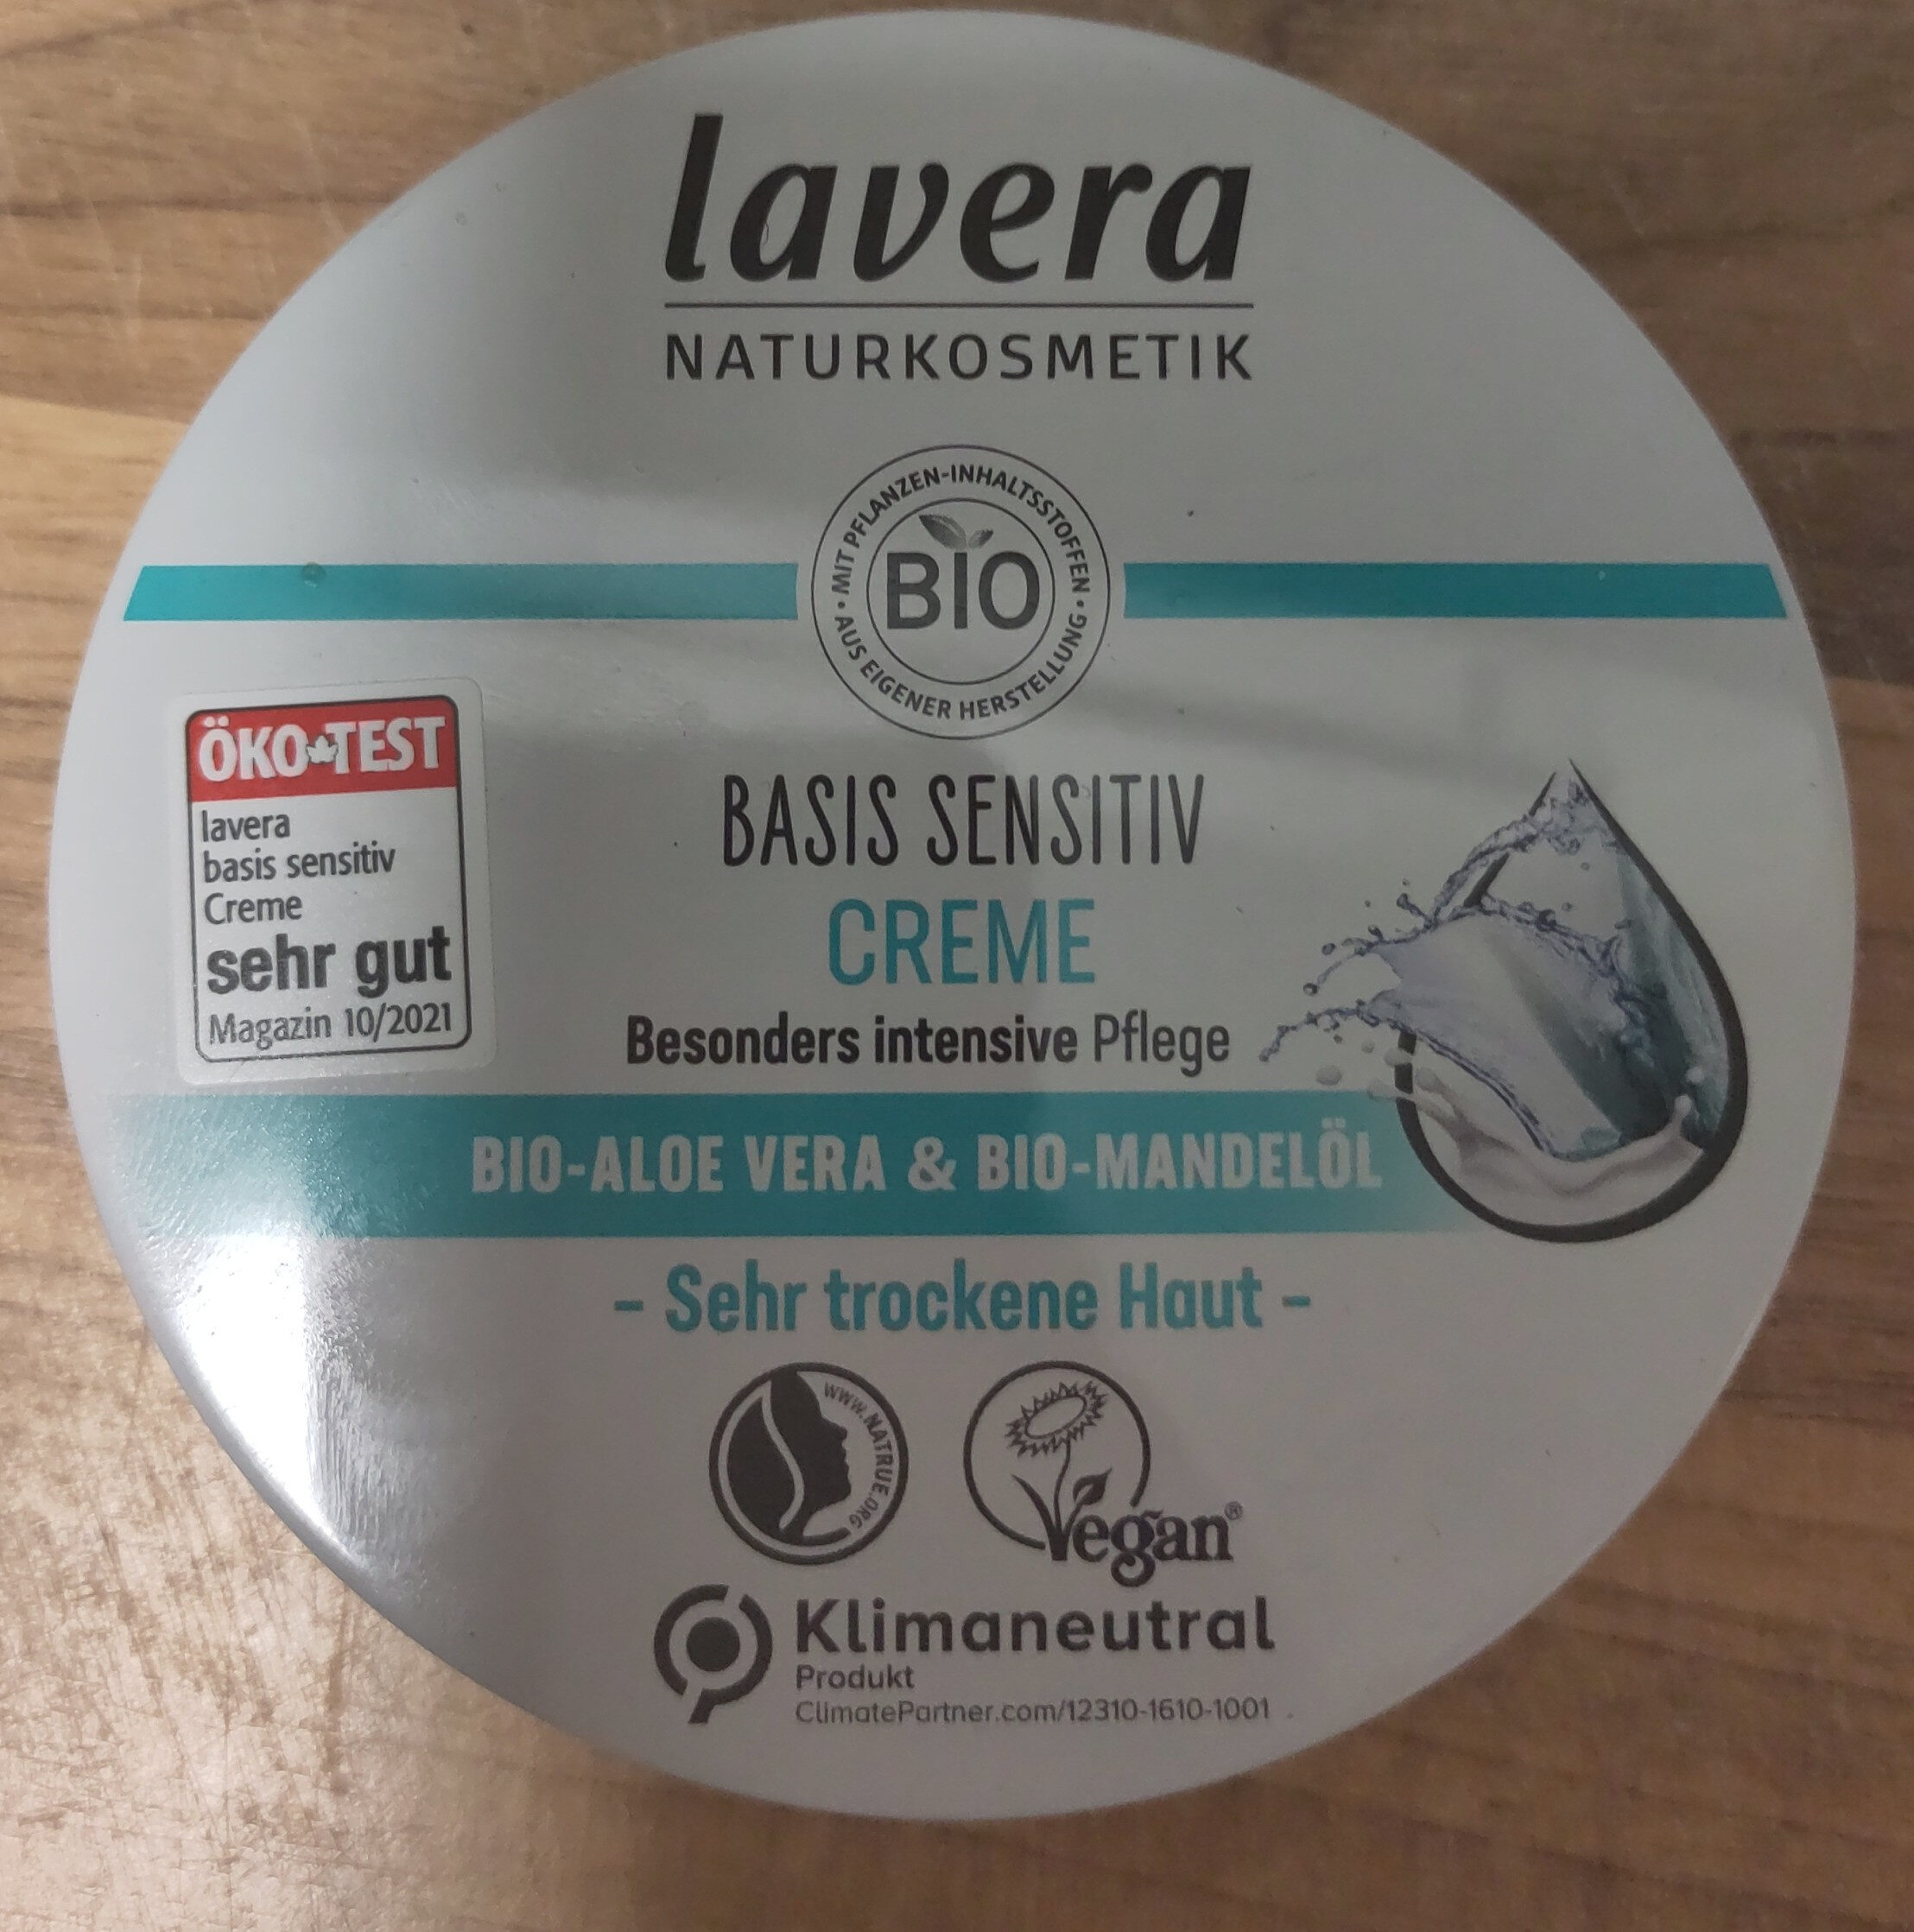 Lavera Naturkosmetik Basis Sensitiv Creme - Produit - en